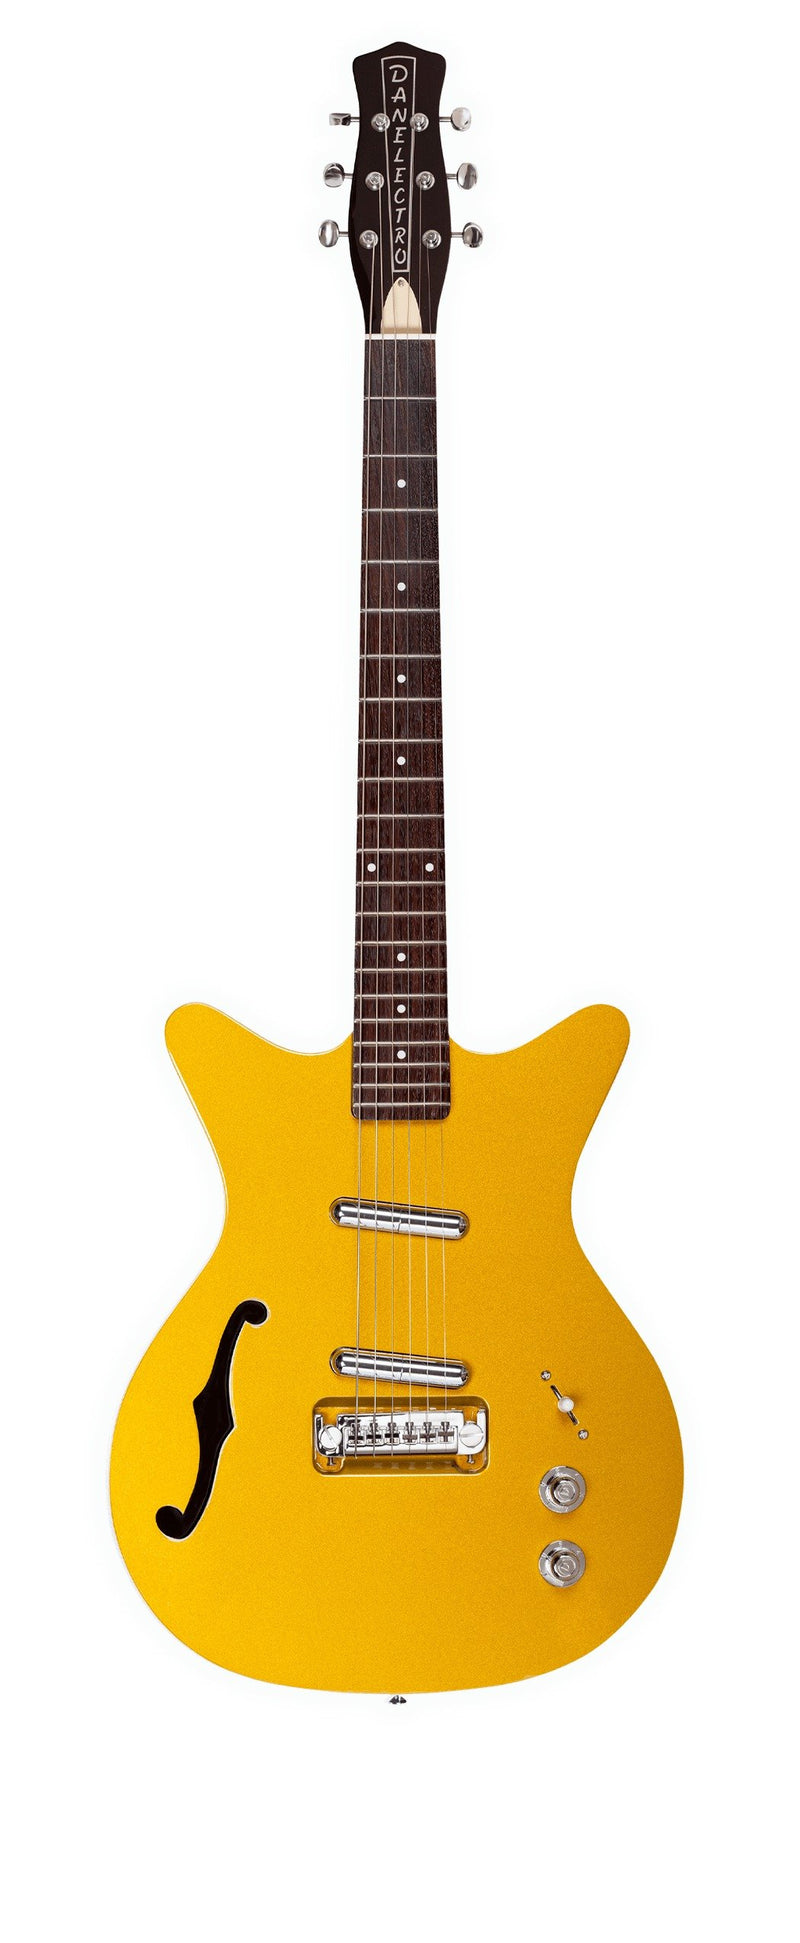 Danelectro Fifty Niner DC Semi-hollowbody Electric Guitar - Gold Top